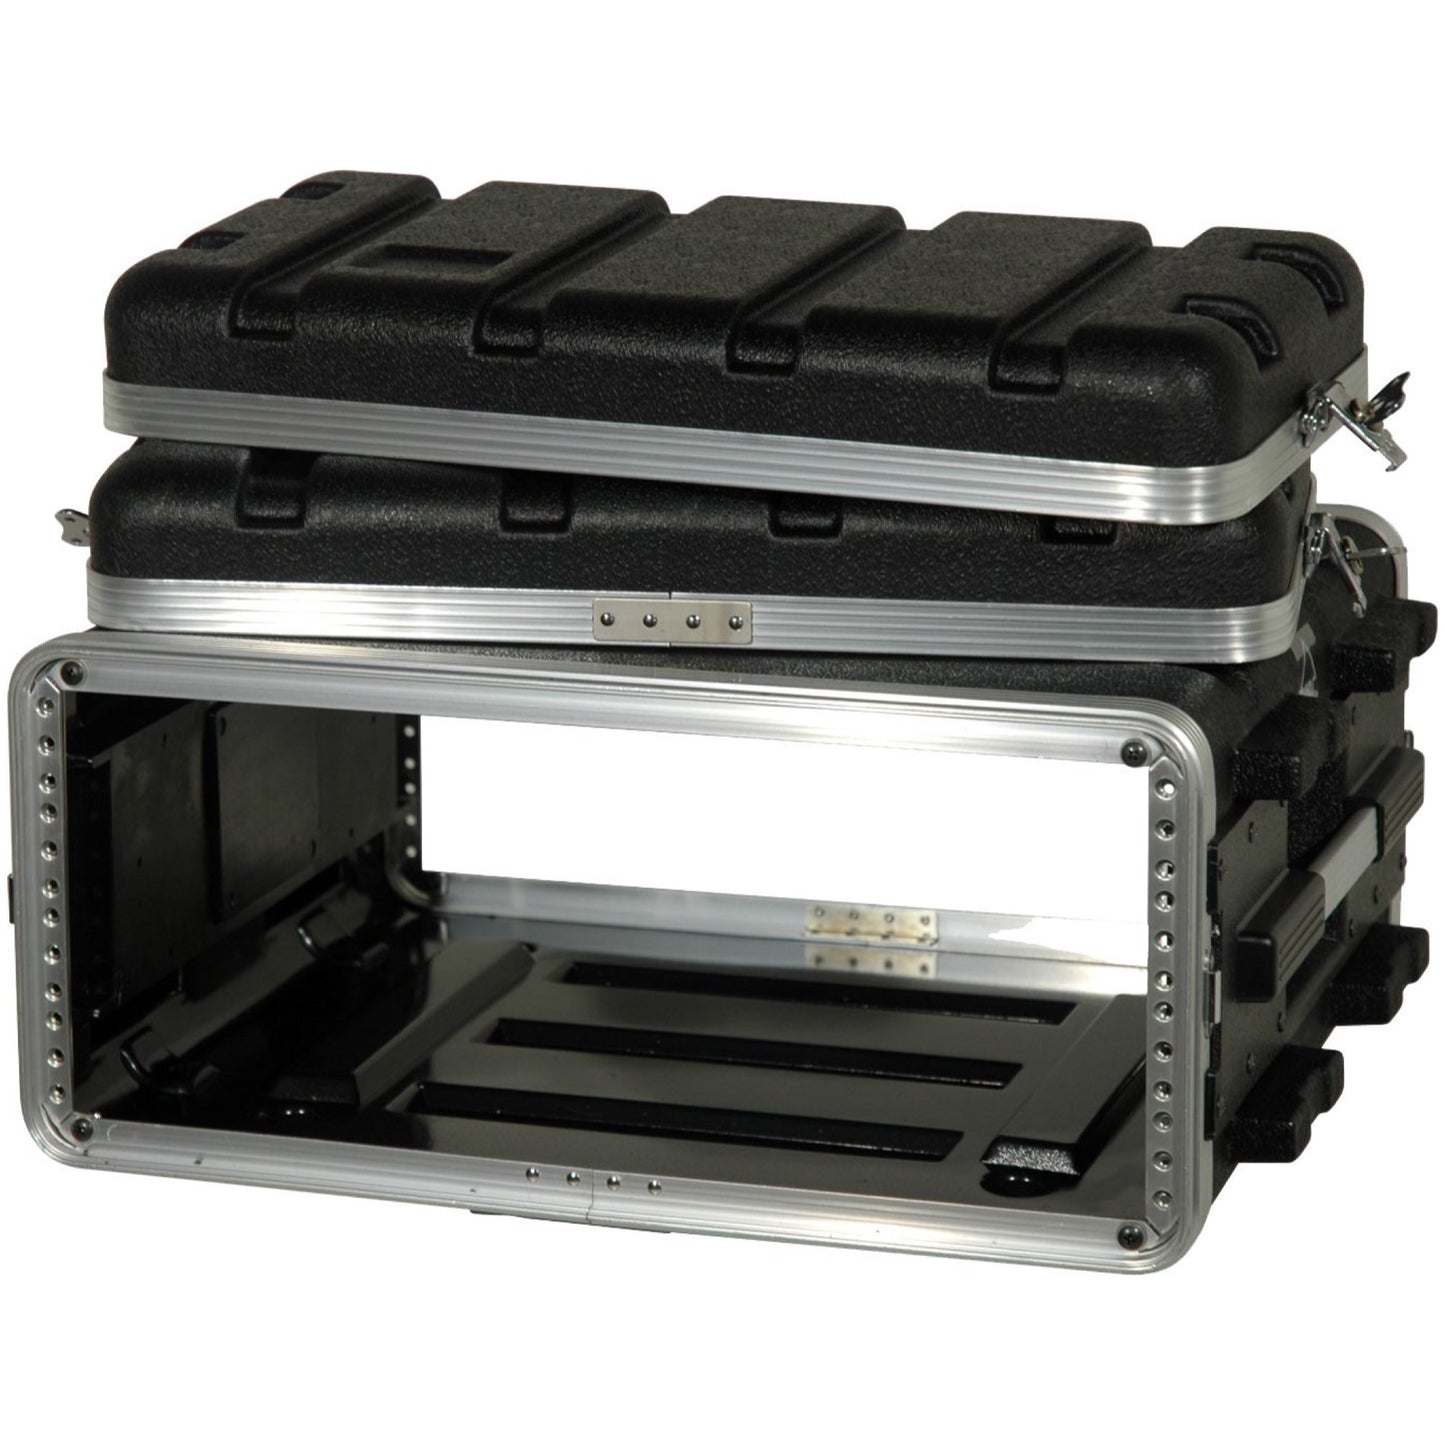 Grundorf ABS Amplifier Rack Case, ABS-R0416B, 4-Space